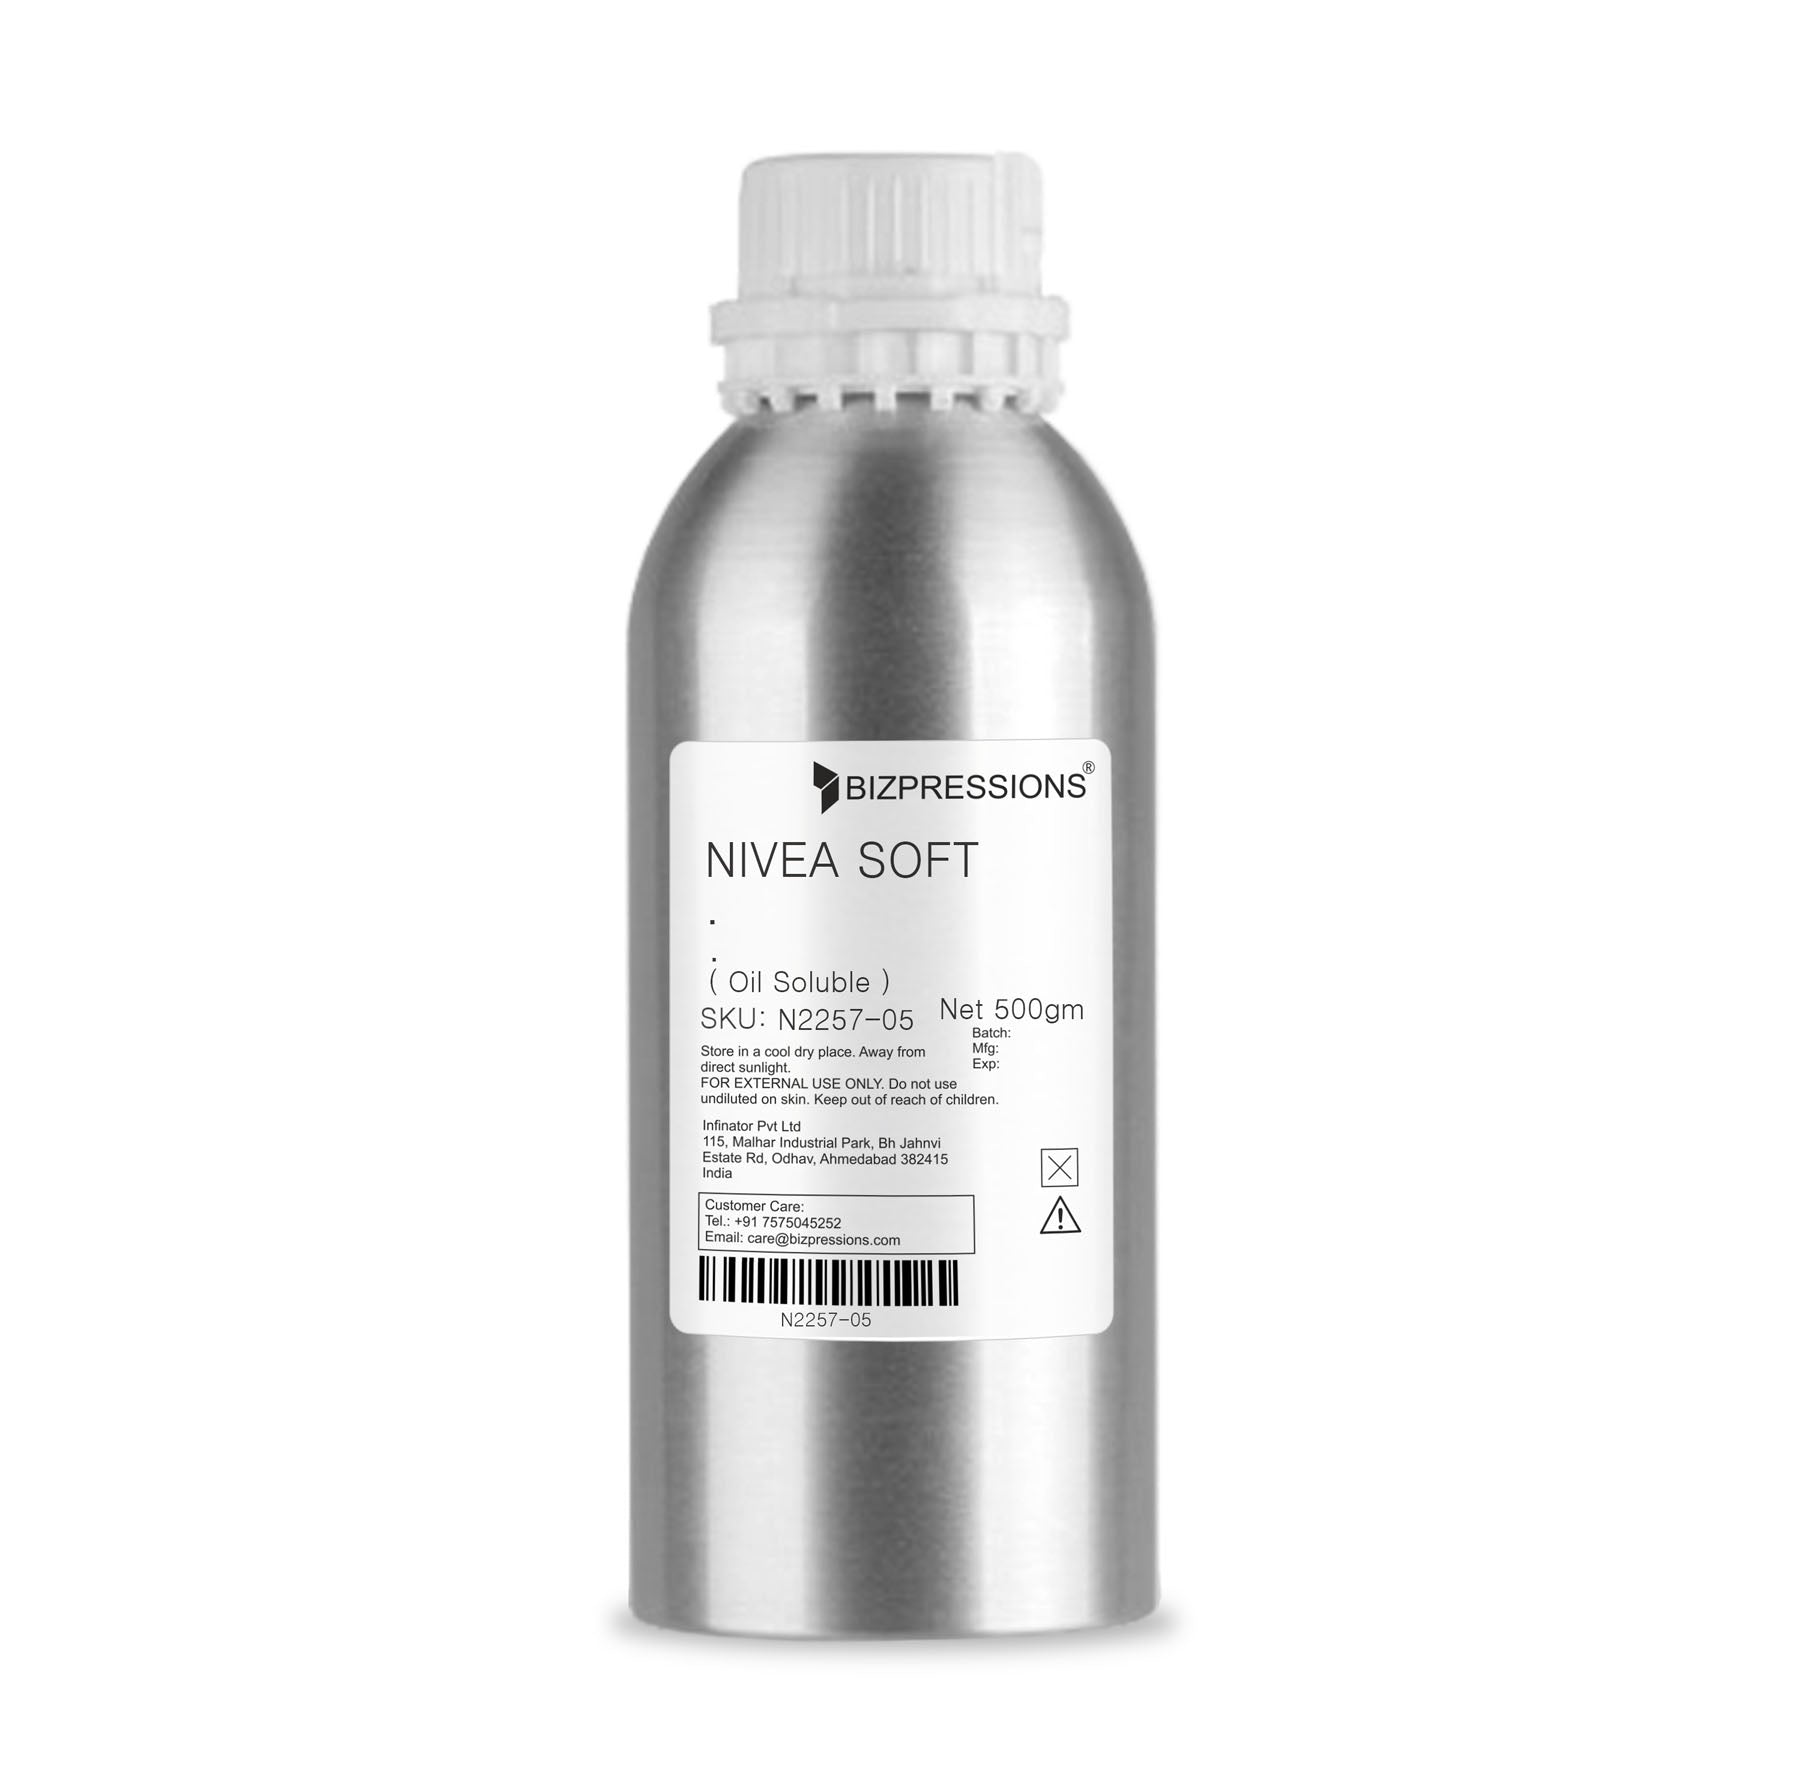 NIVEA SOFT - Fragrance ( Oil Soluble ) - 500 gm